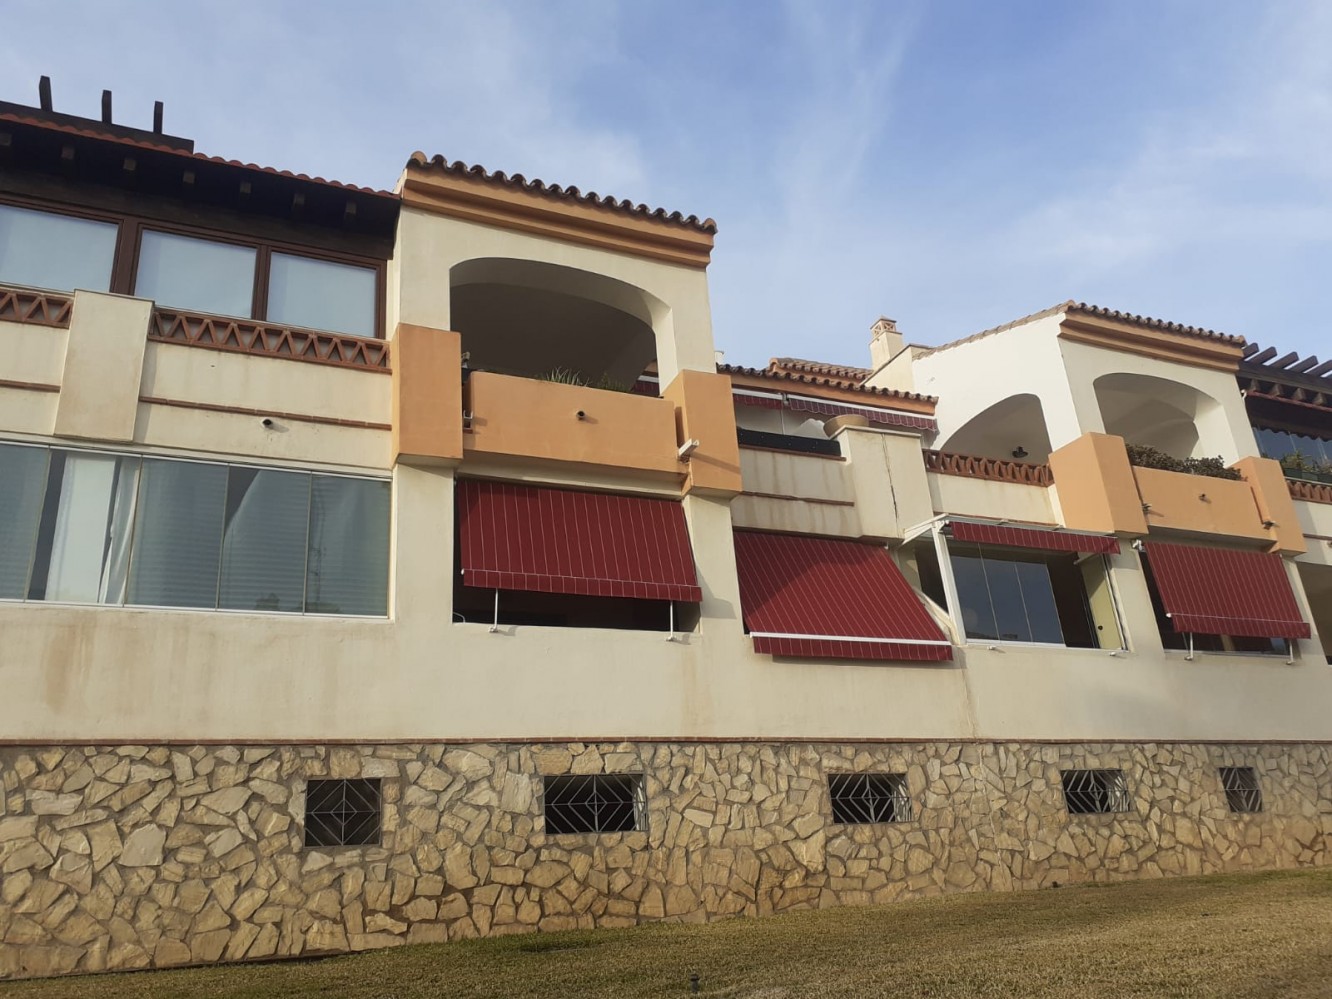 Lejlighed til salg i Caleta de Vélez